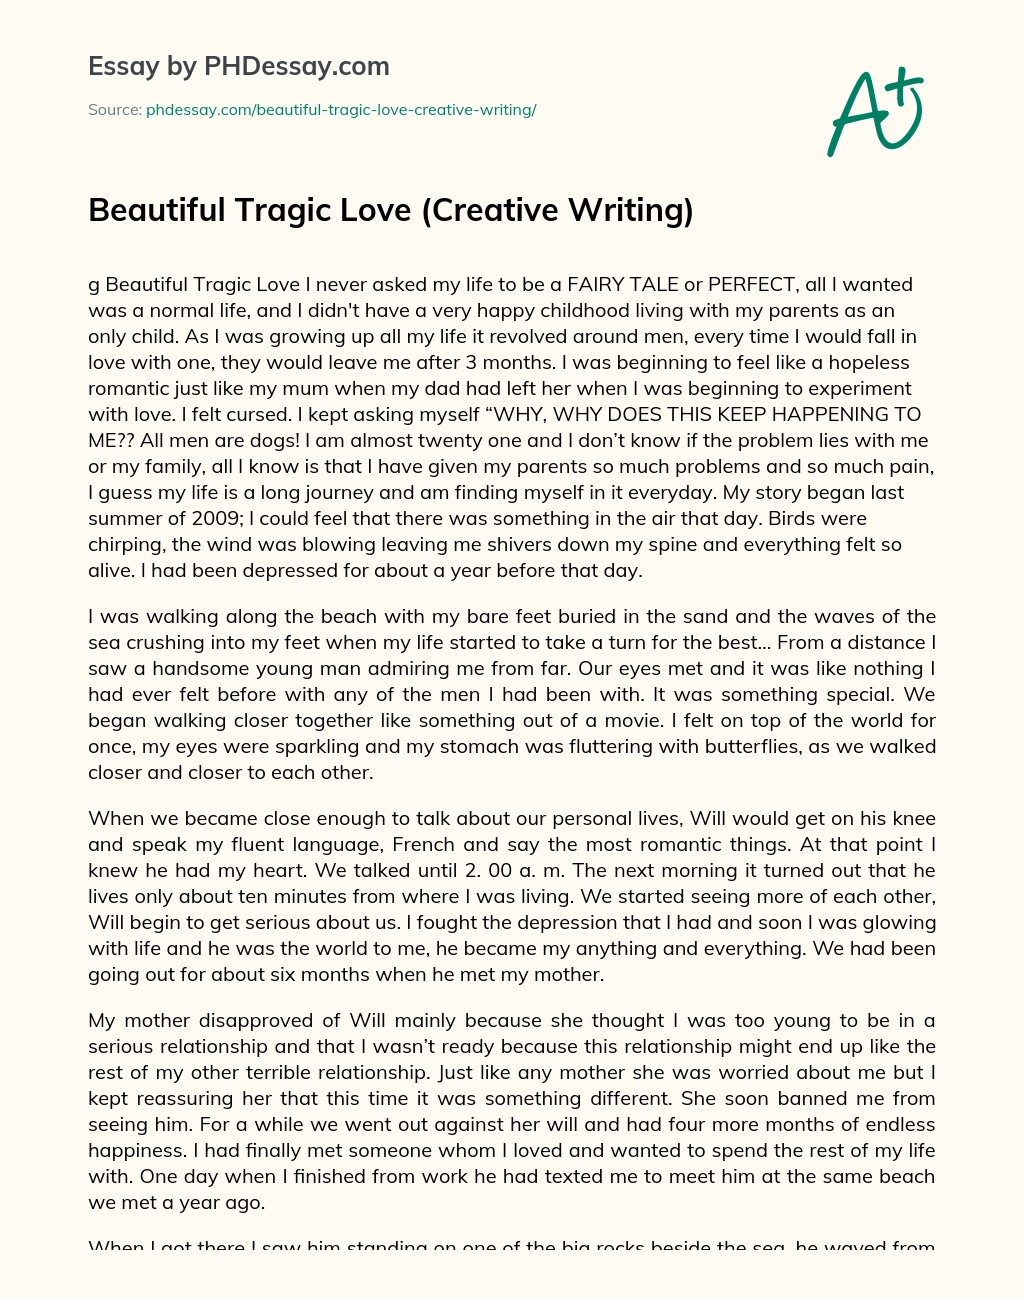 sad ending love story essay